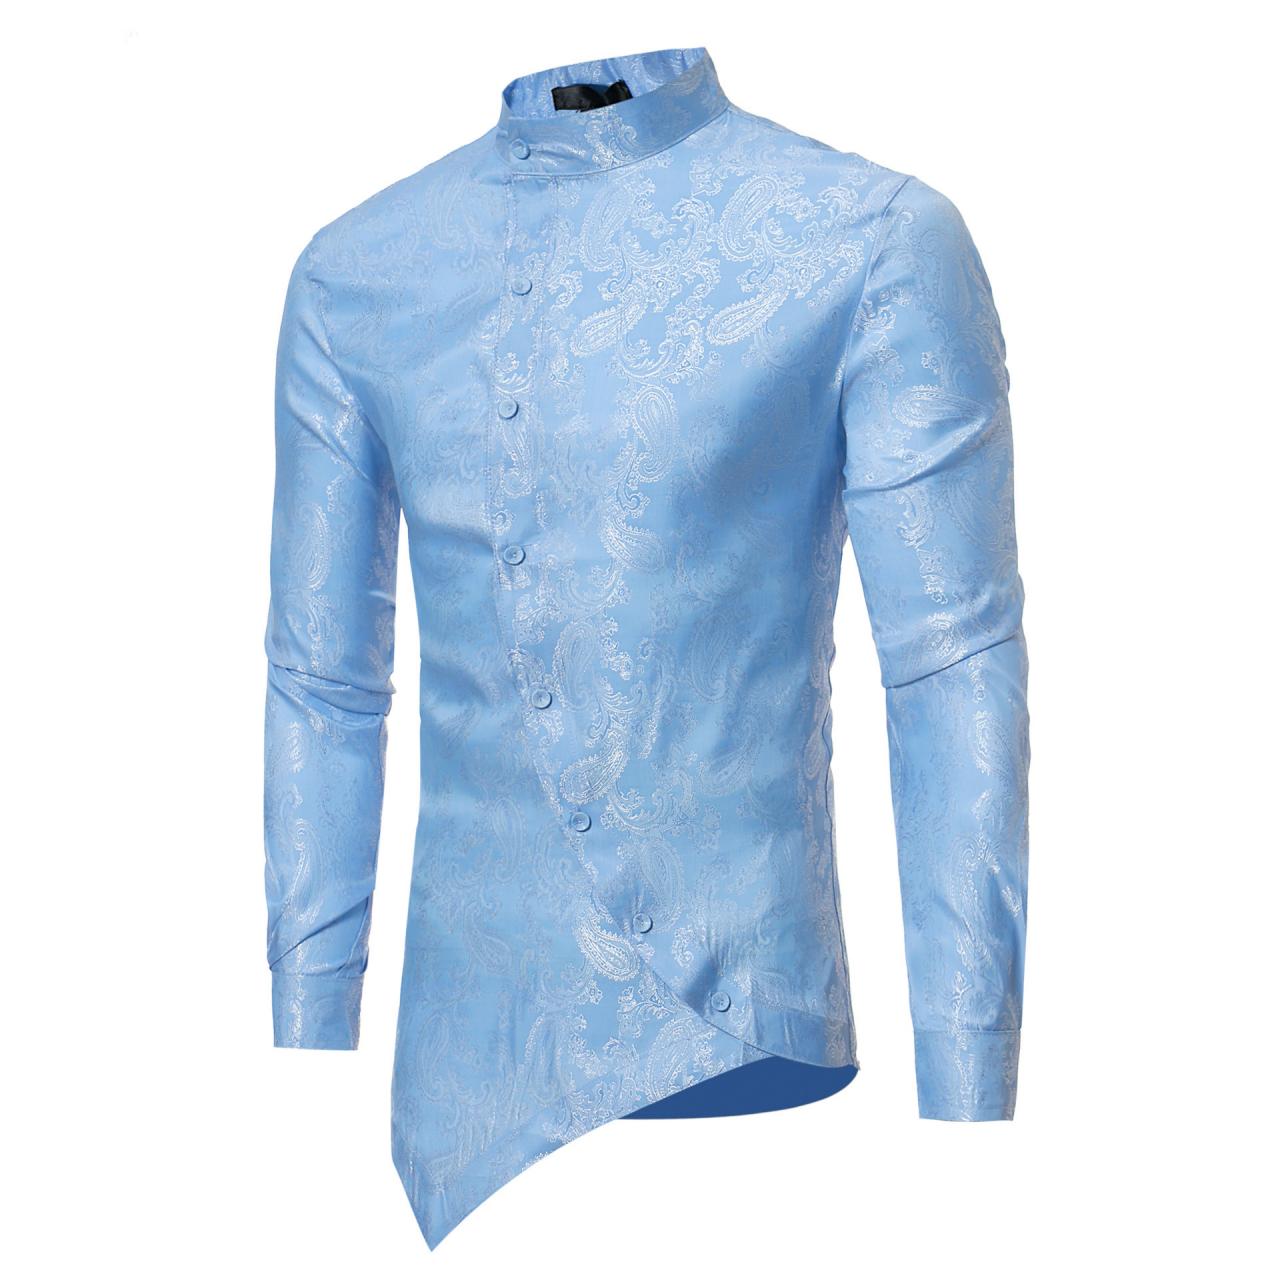  Men Asymmetrical Shirt Spring Autumn Long Sleeve Stand Collar Business Printed Slim Fit Shirt light blue